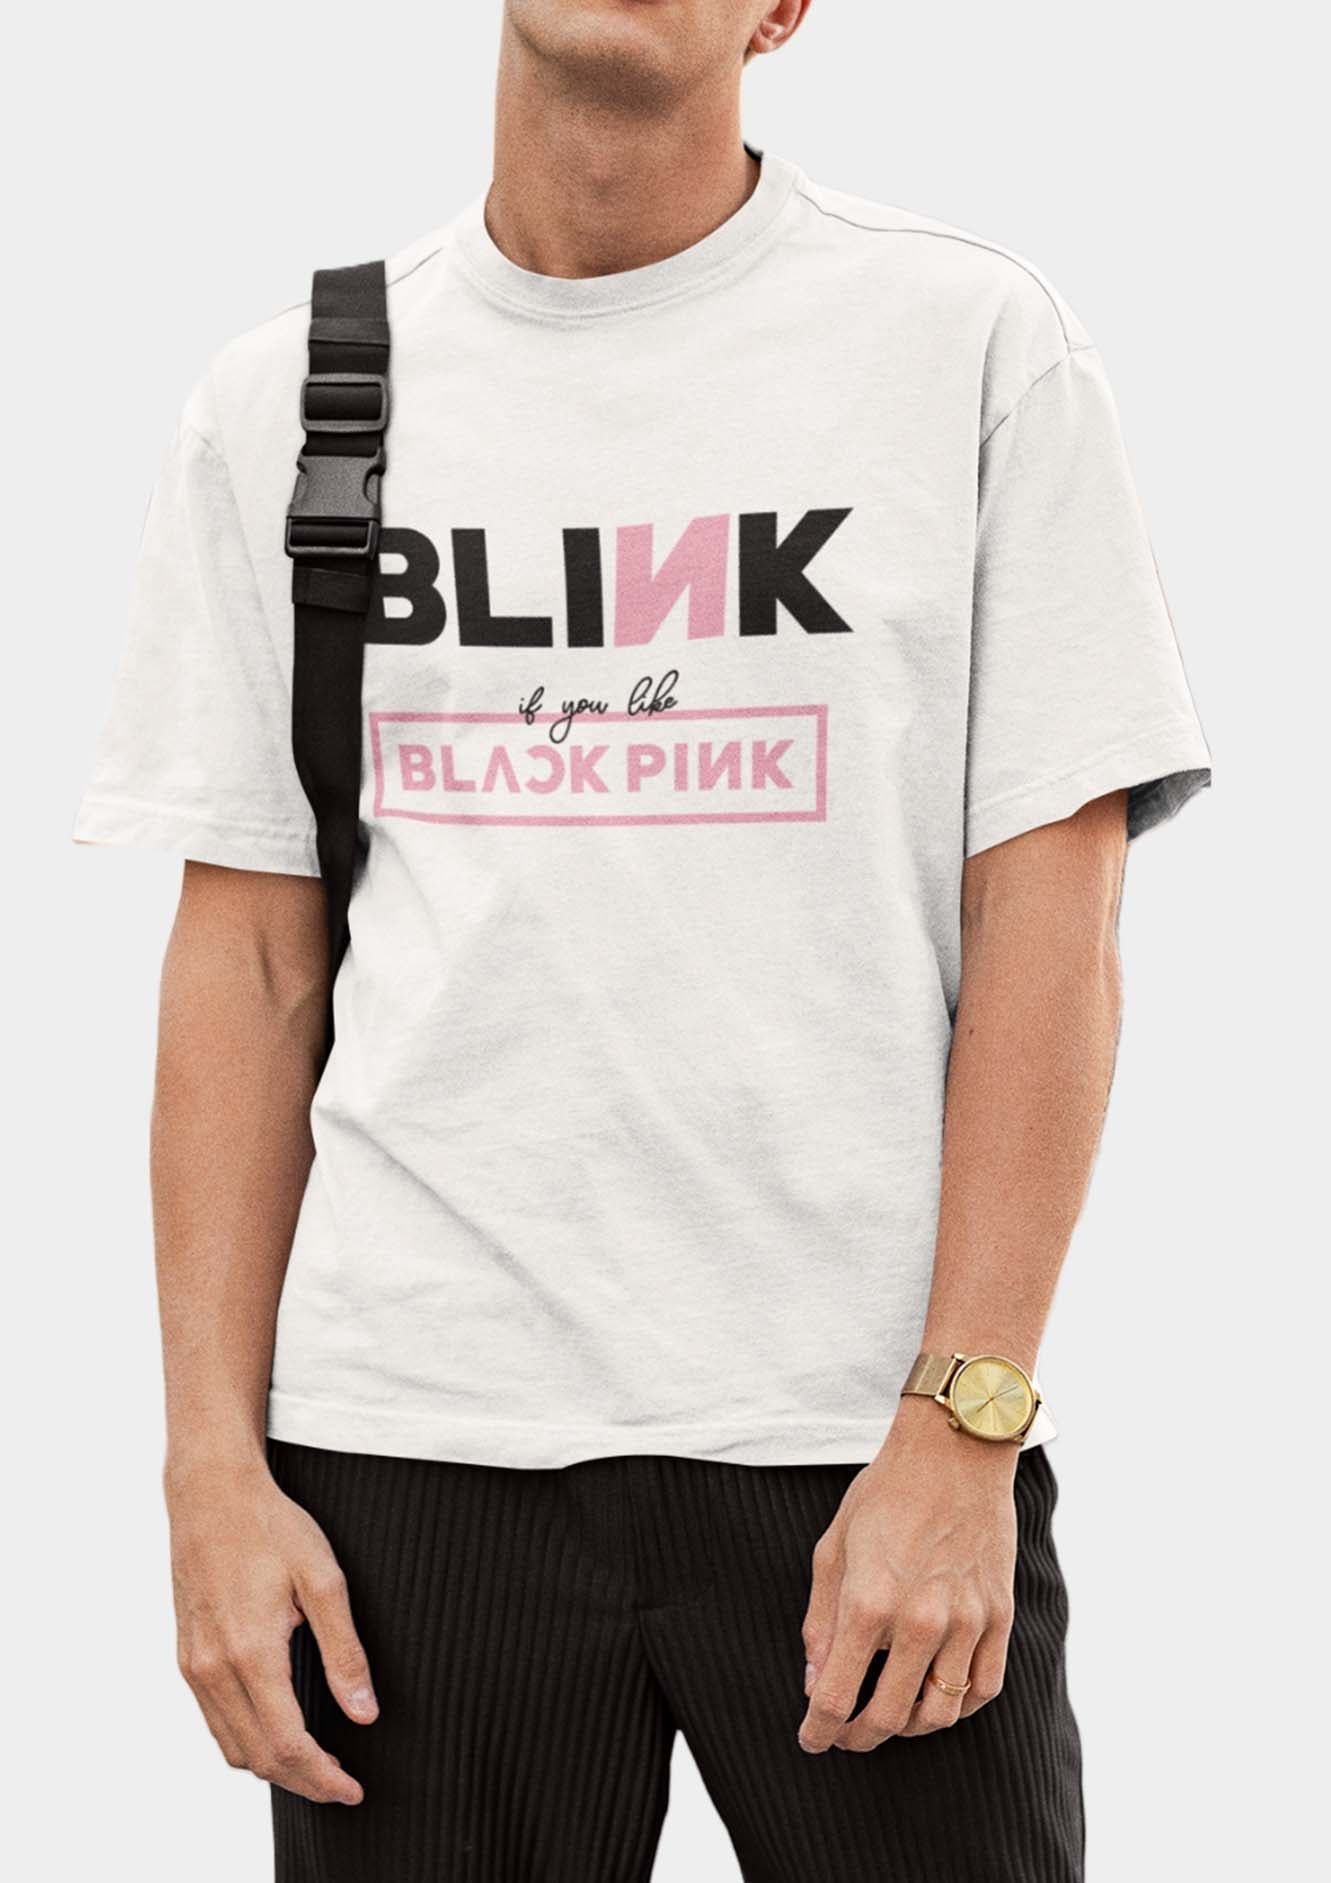 Blackpink Blink Unisex Tshirt | BFS